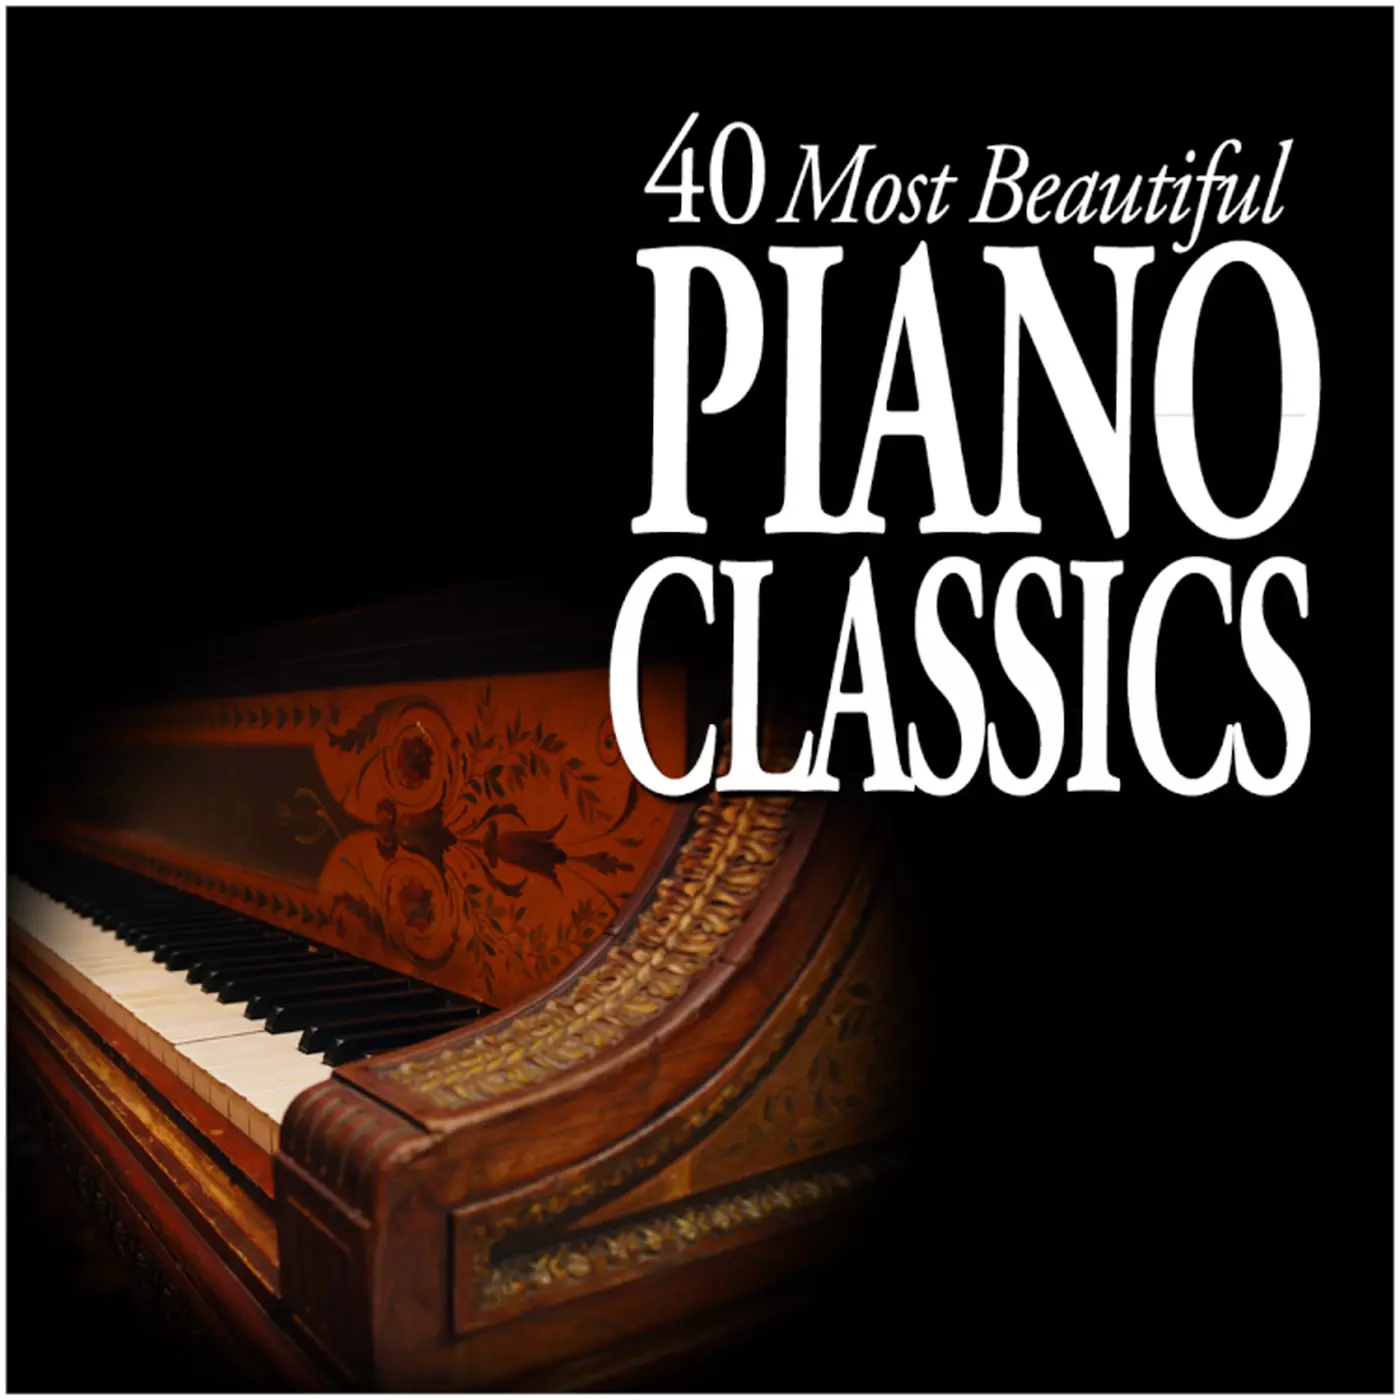 40 Most Beautiful Piano Classics